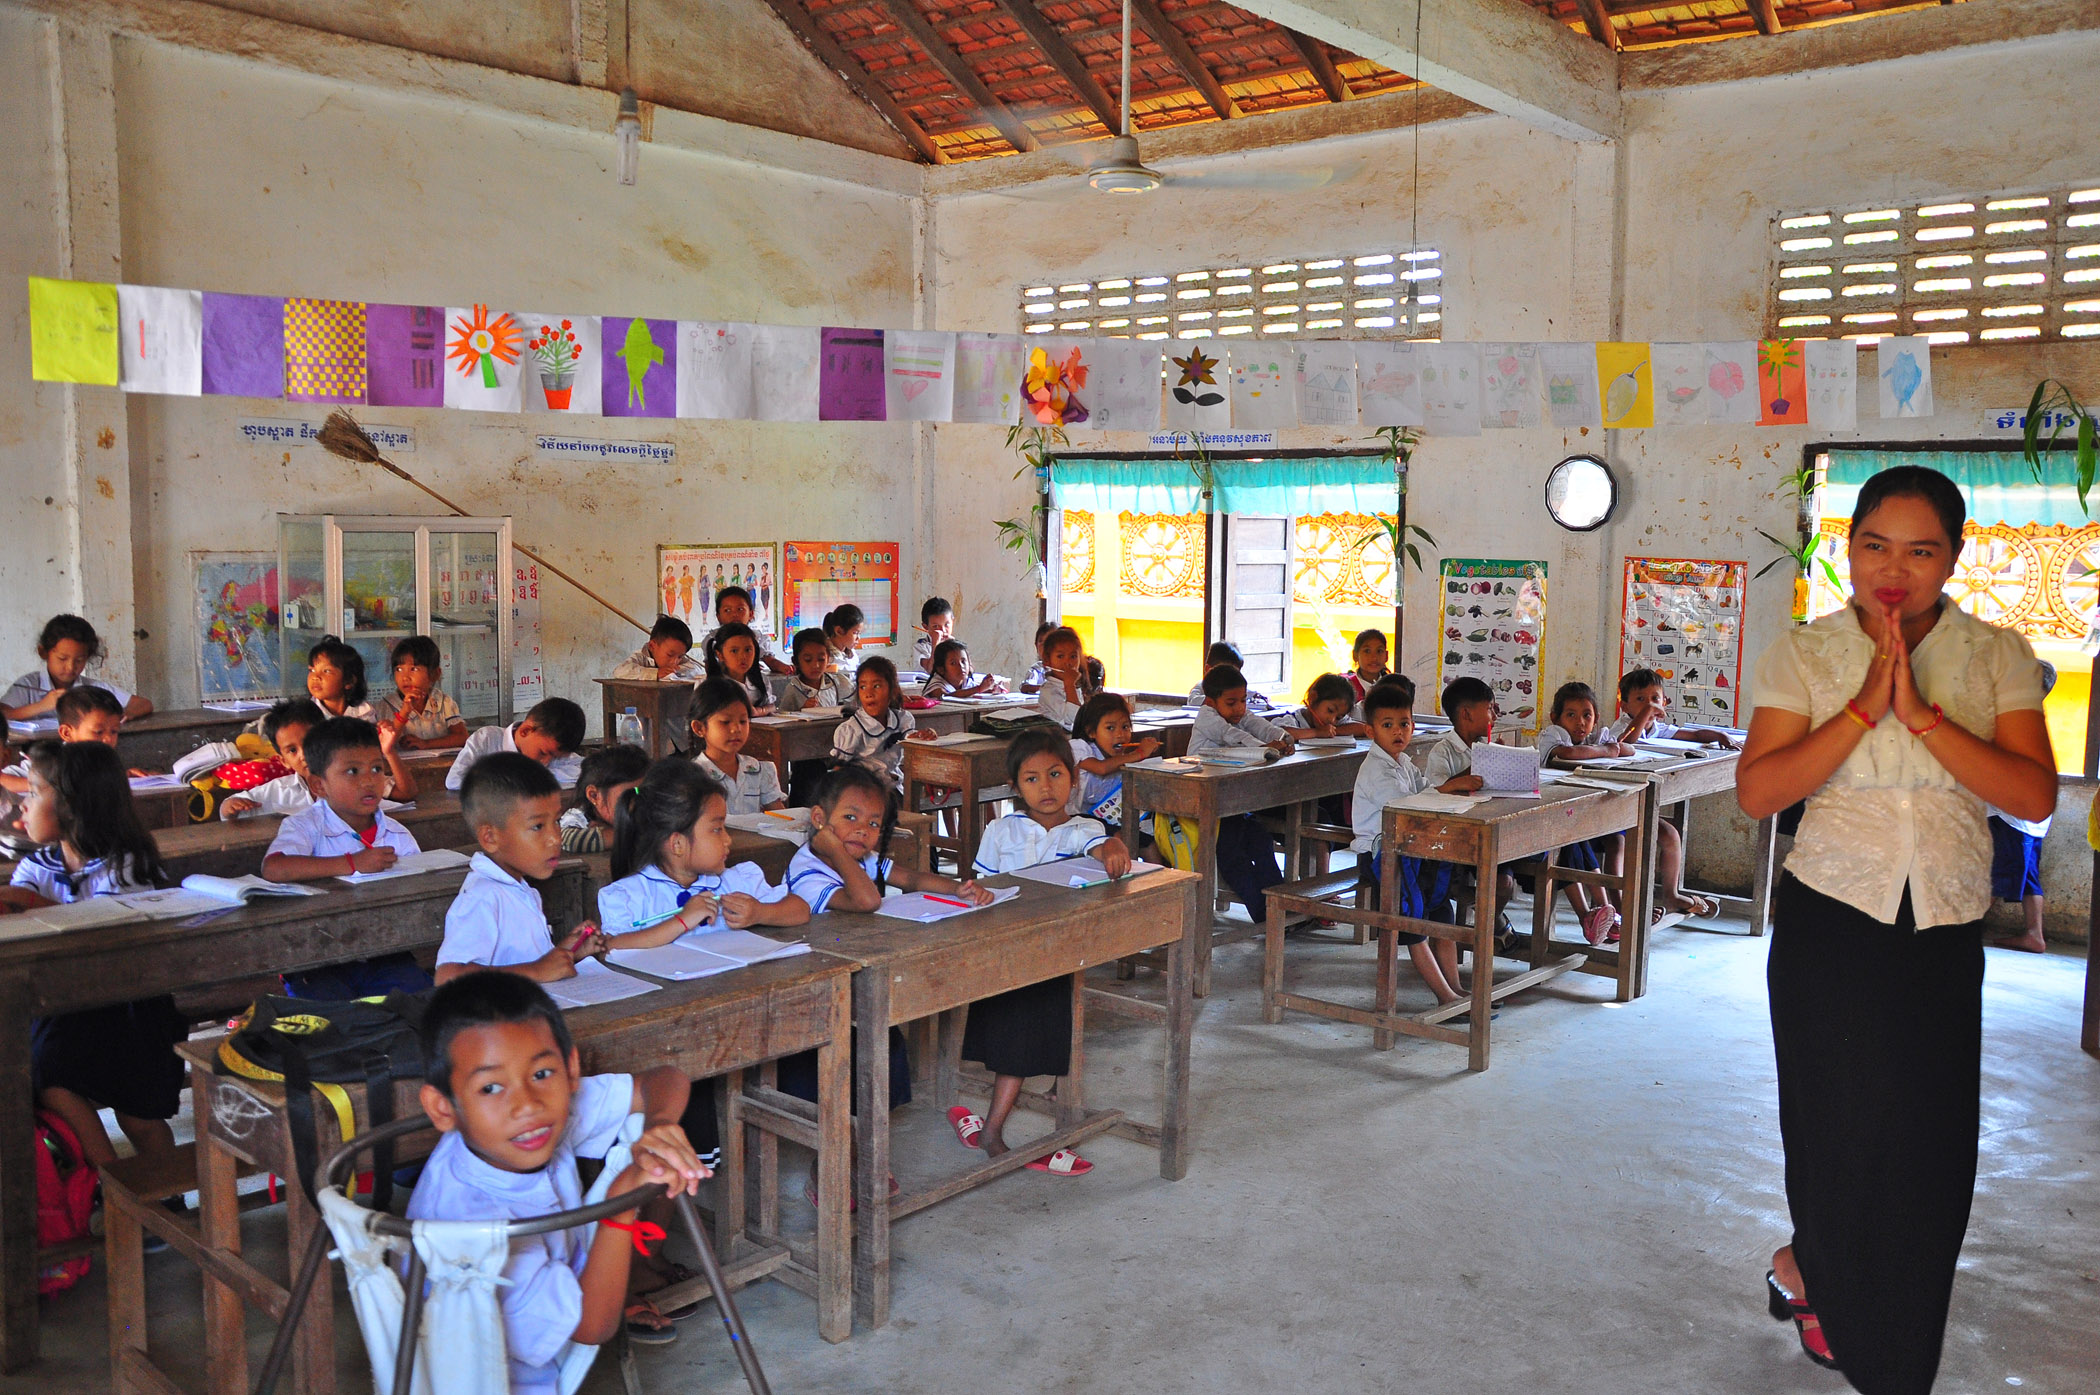 6. School in Cambodia